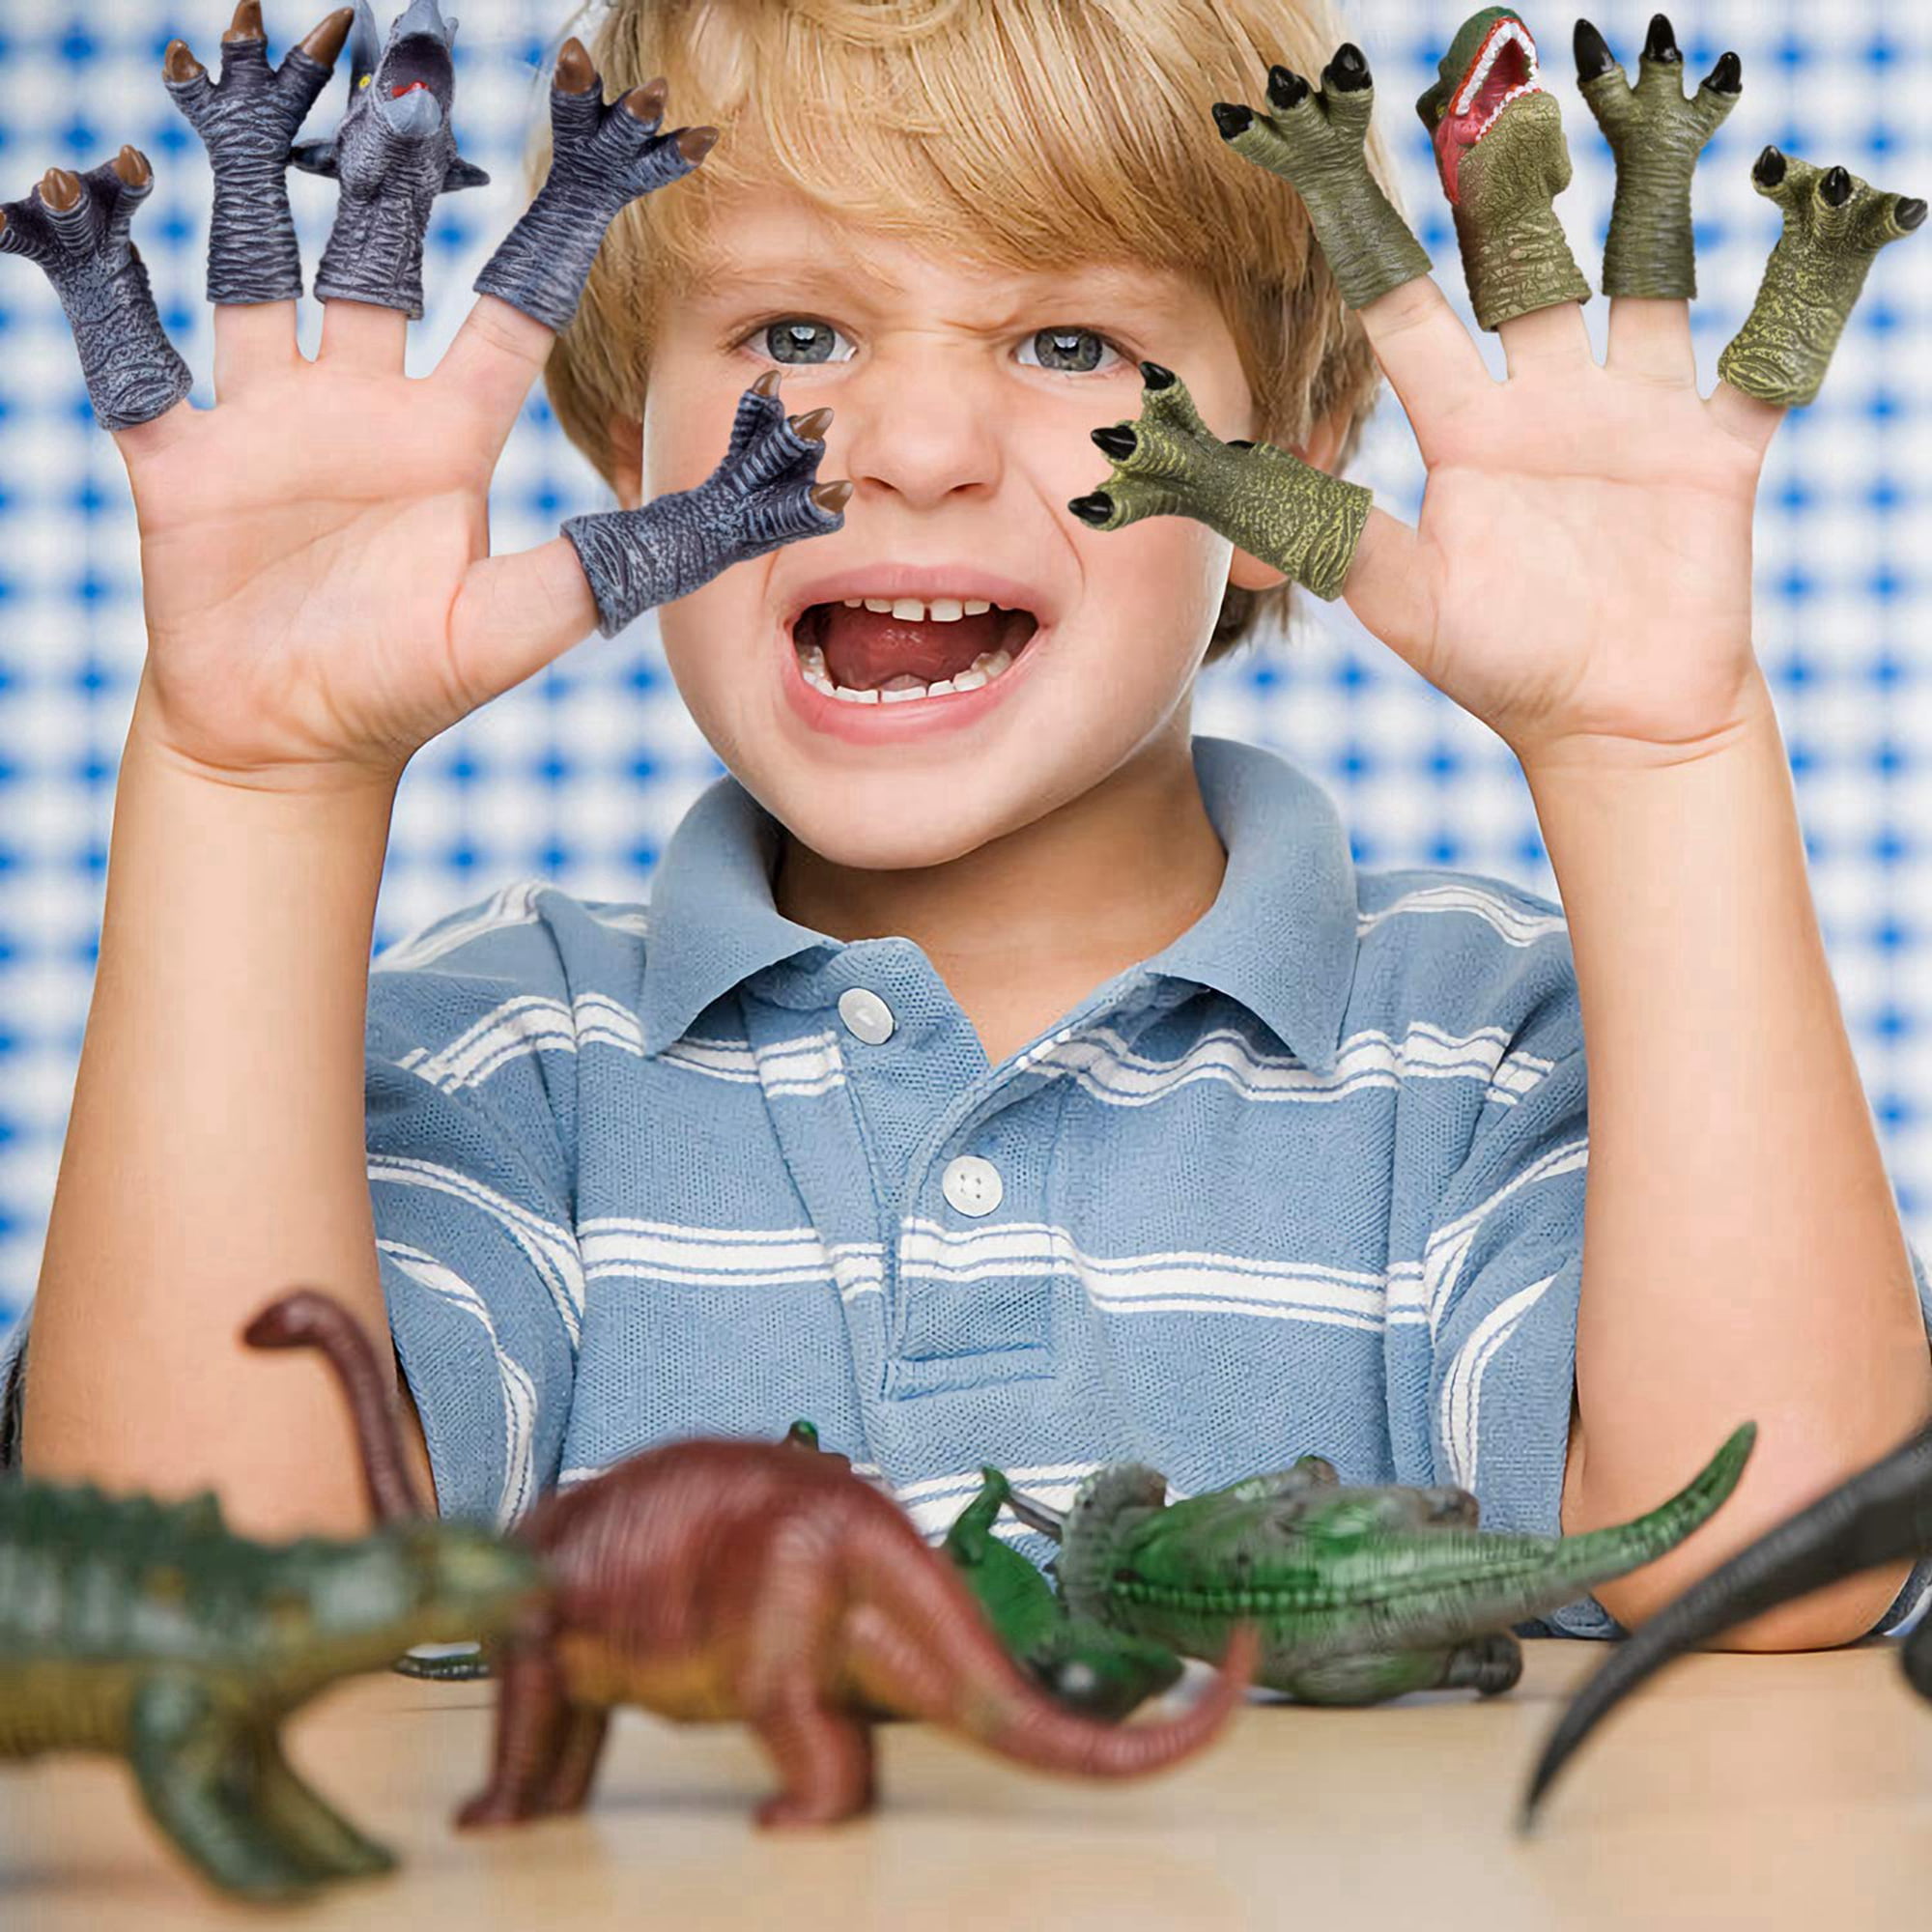 TA BEST Dinosaur Hand Puppets 9 Plush Animal Toys for Imaginative Pretend Play Stocking Storytelling Green